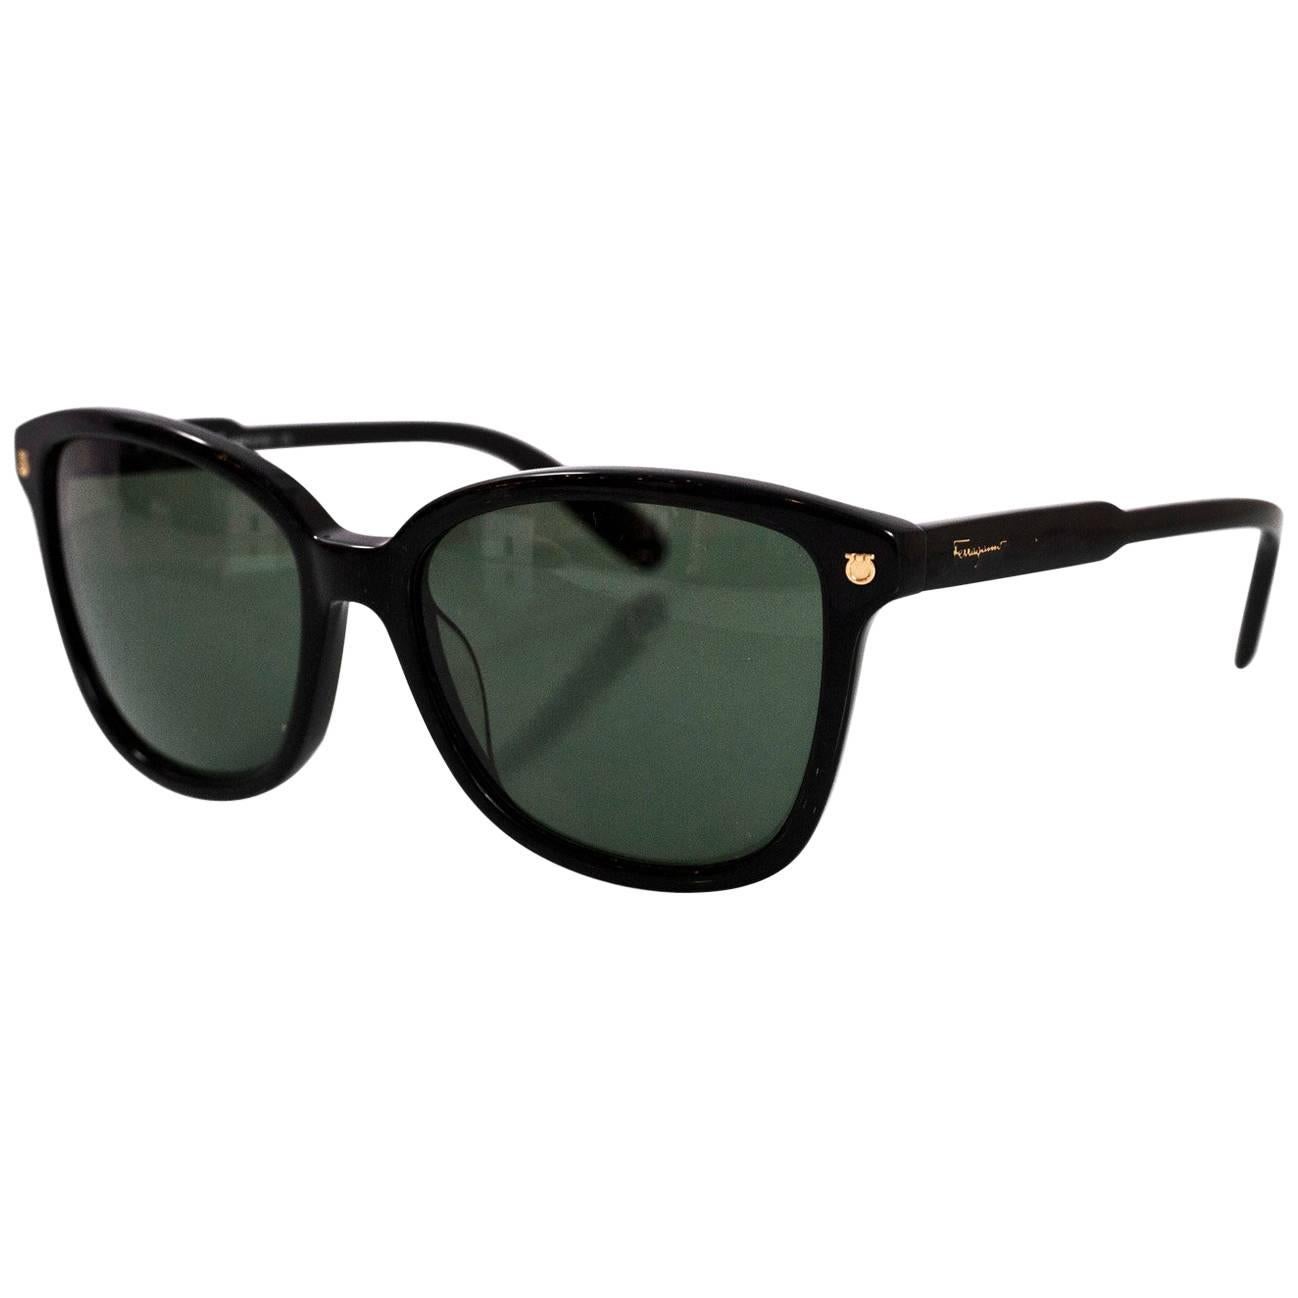 Salvatore Ferragamo Black Resin Sunglasses with Case